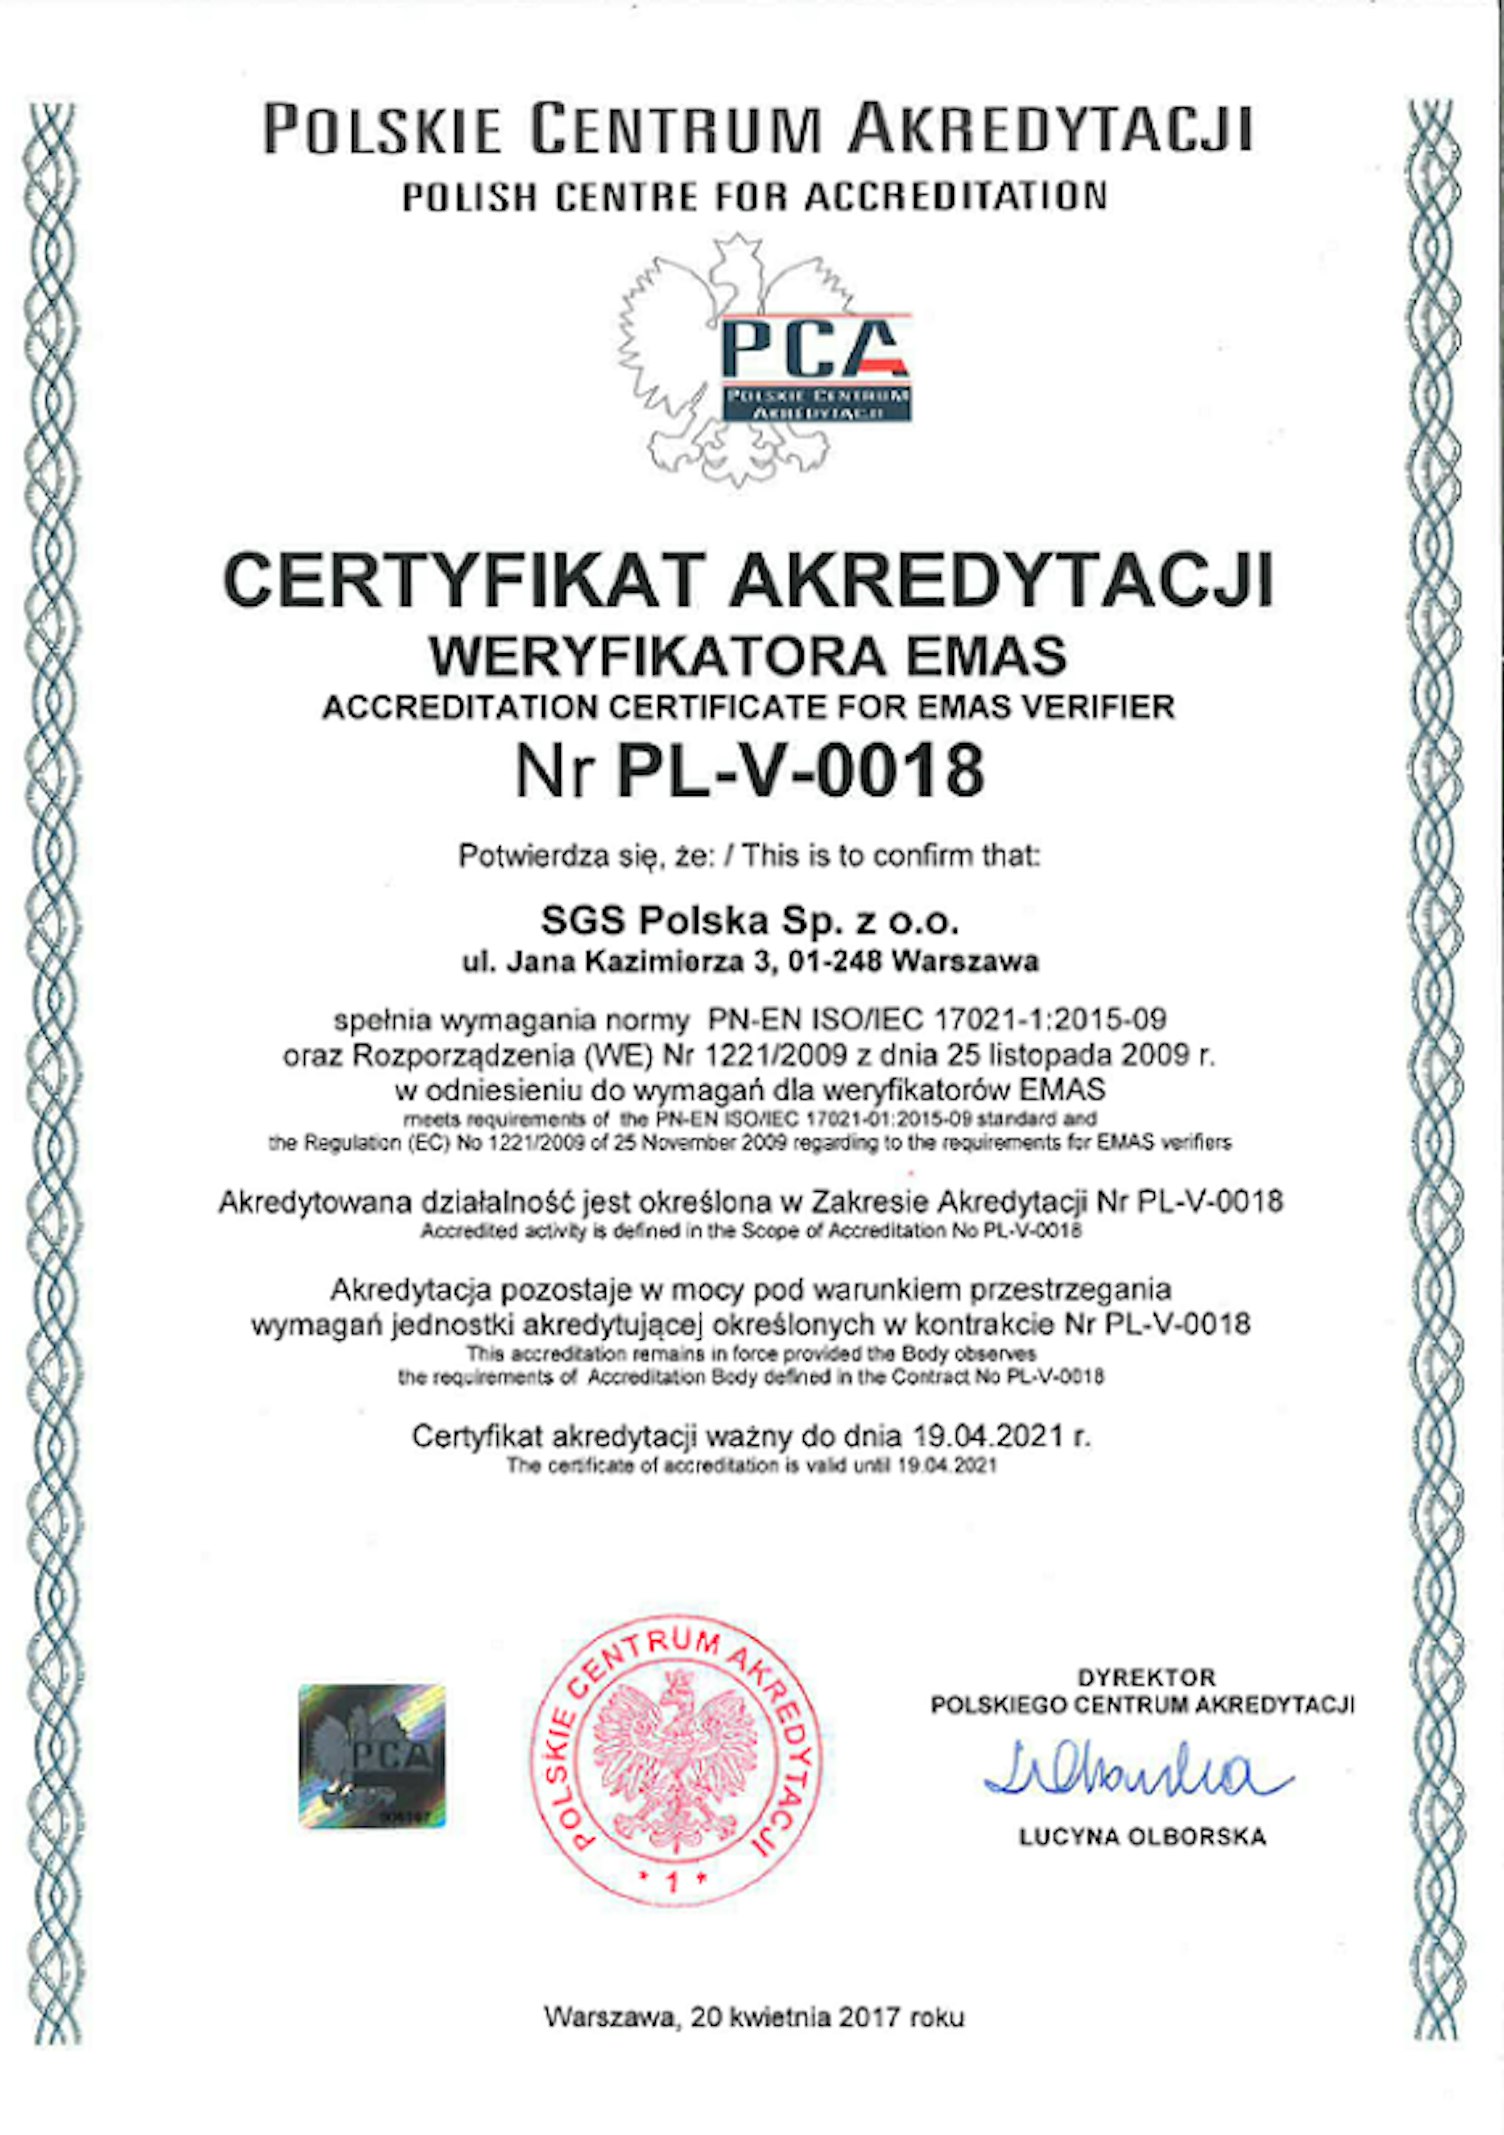 emas accreditation certificate